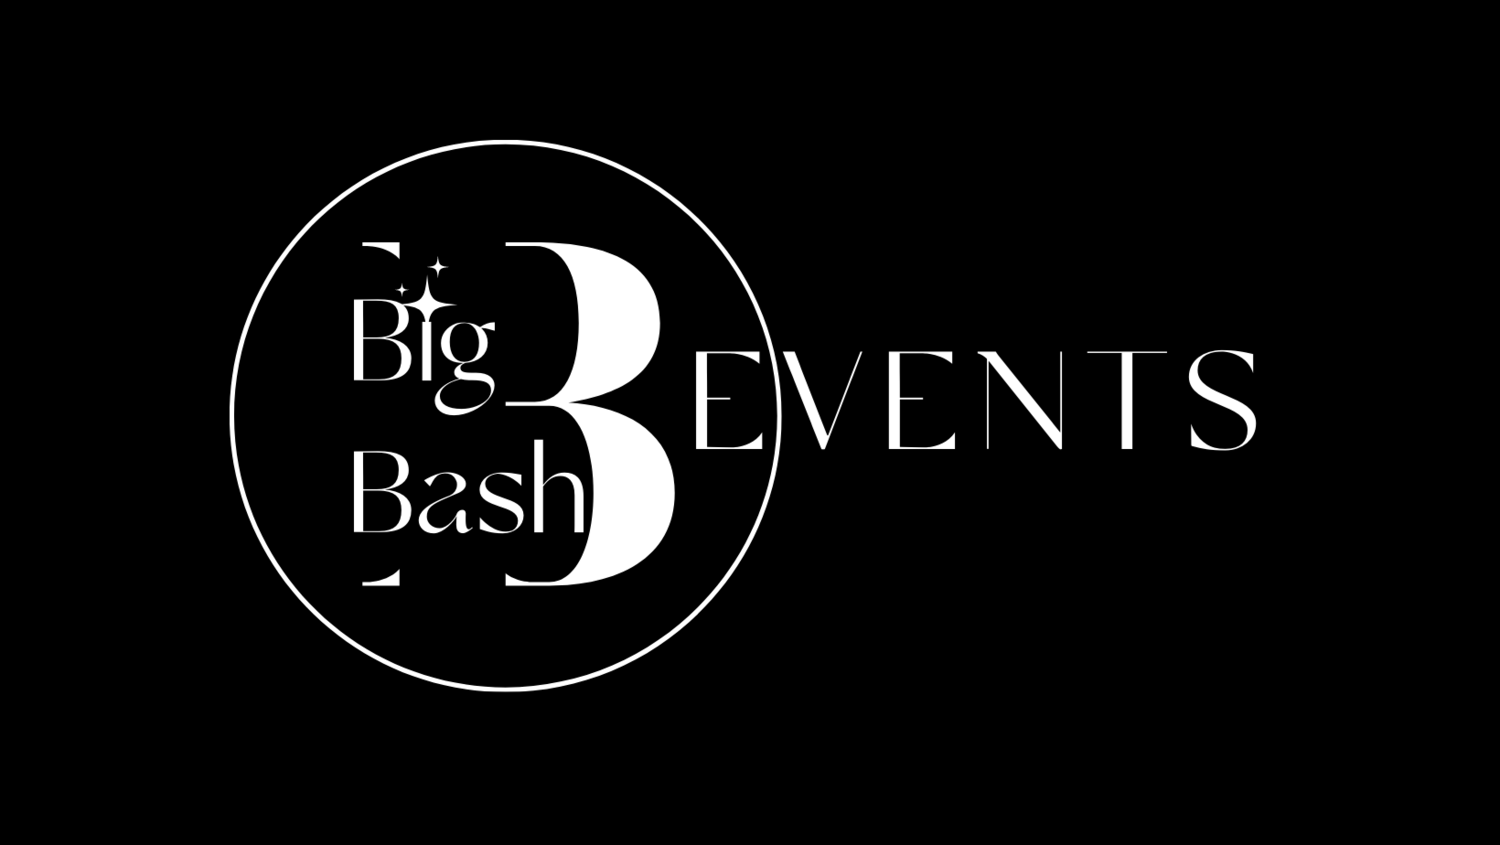 Big Bash Events